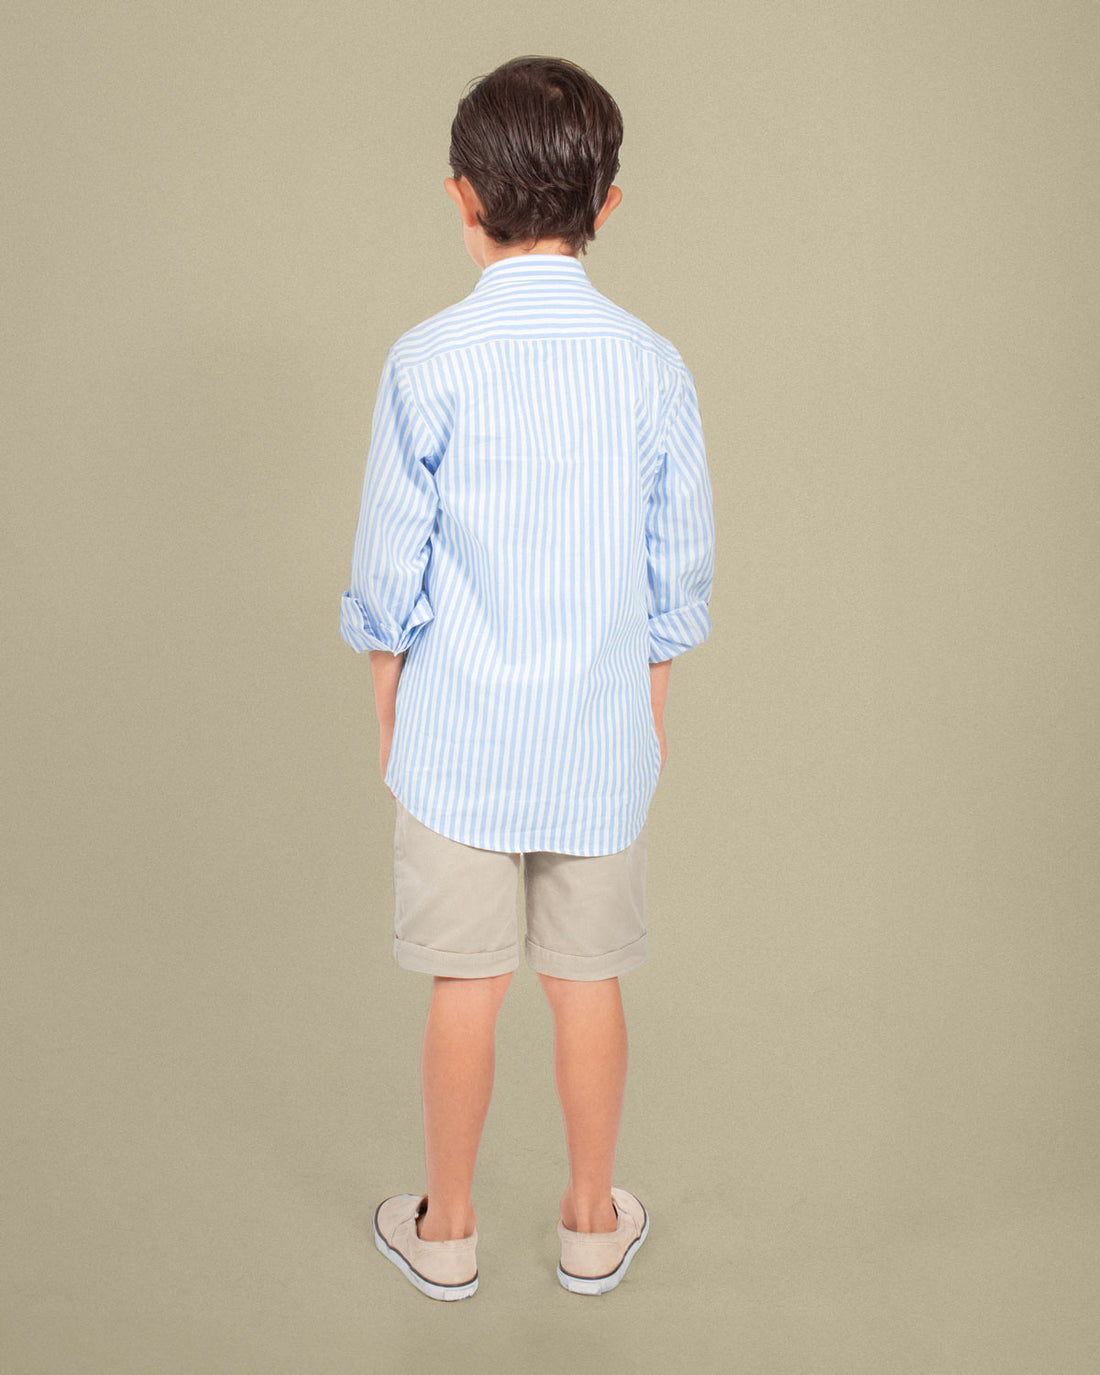 Camisa de rayas azul claro para niño